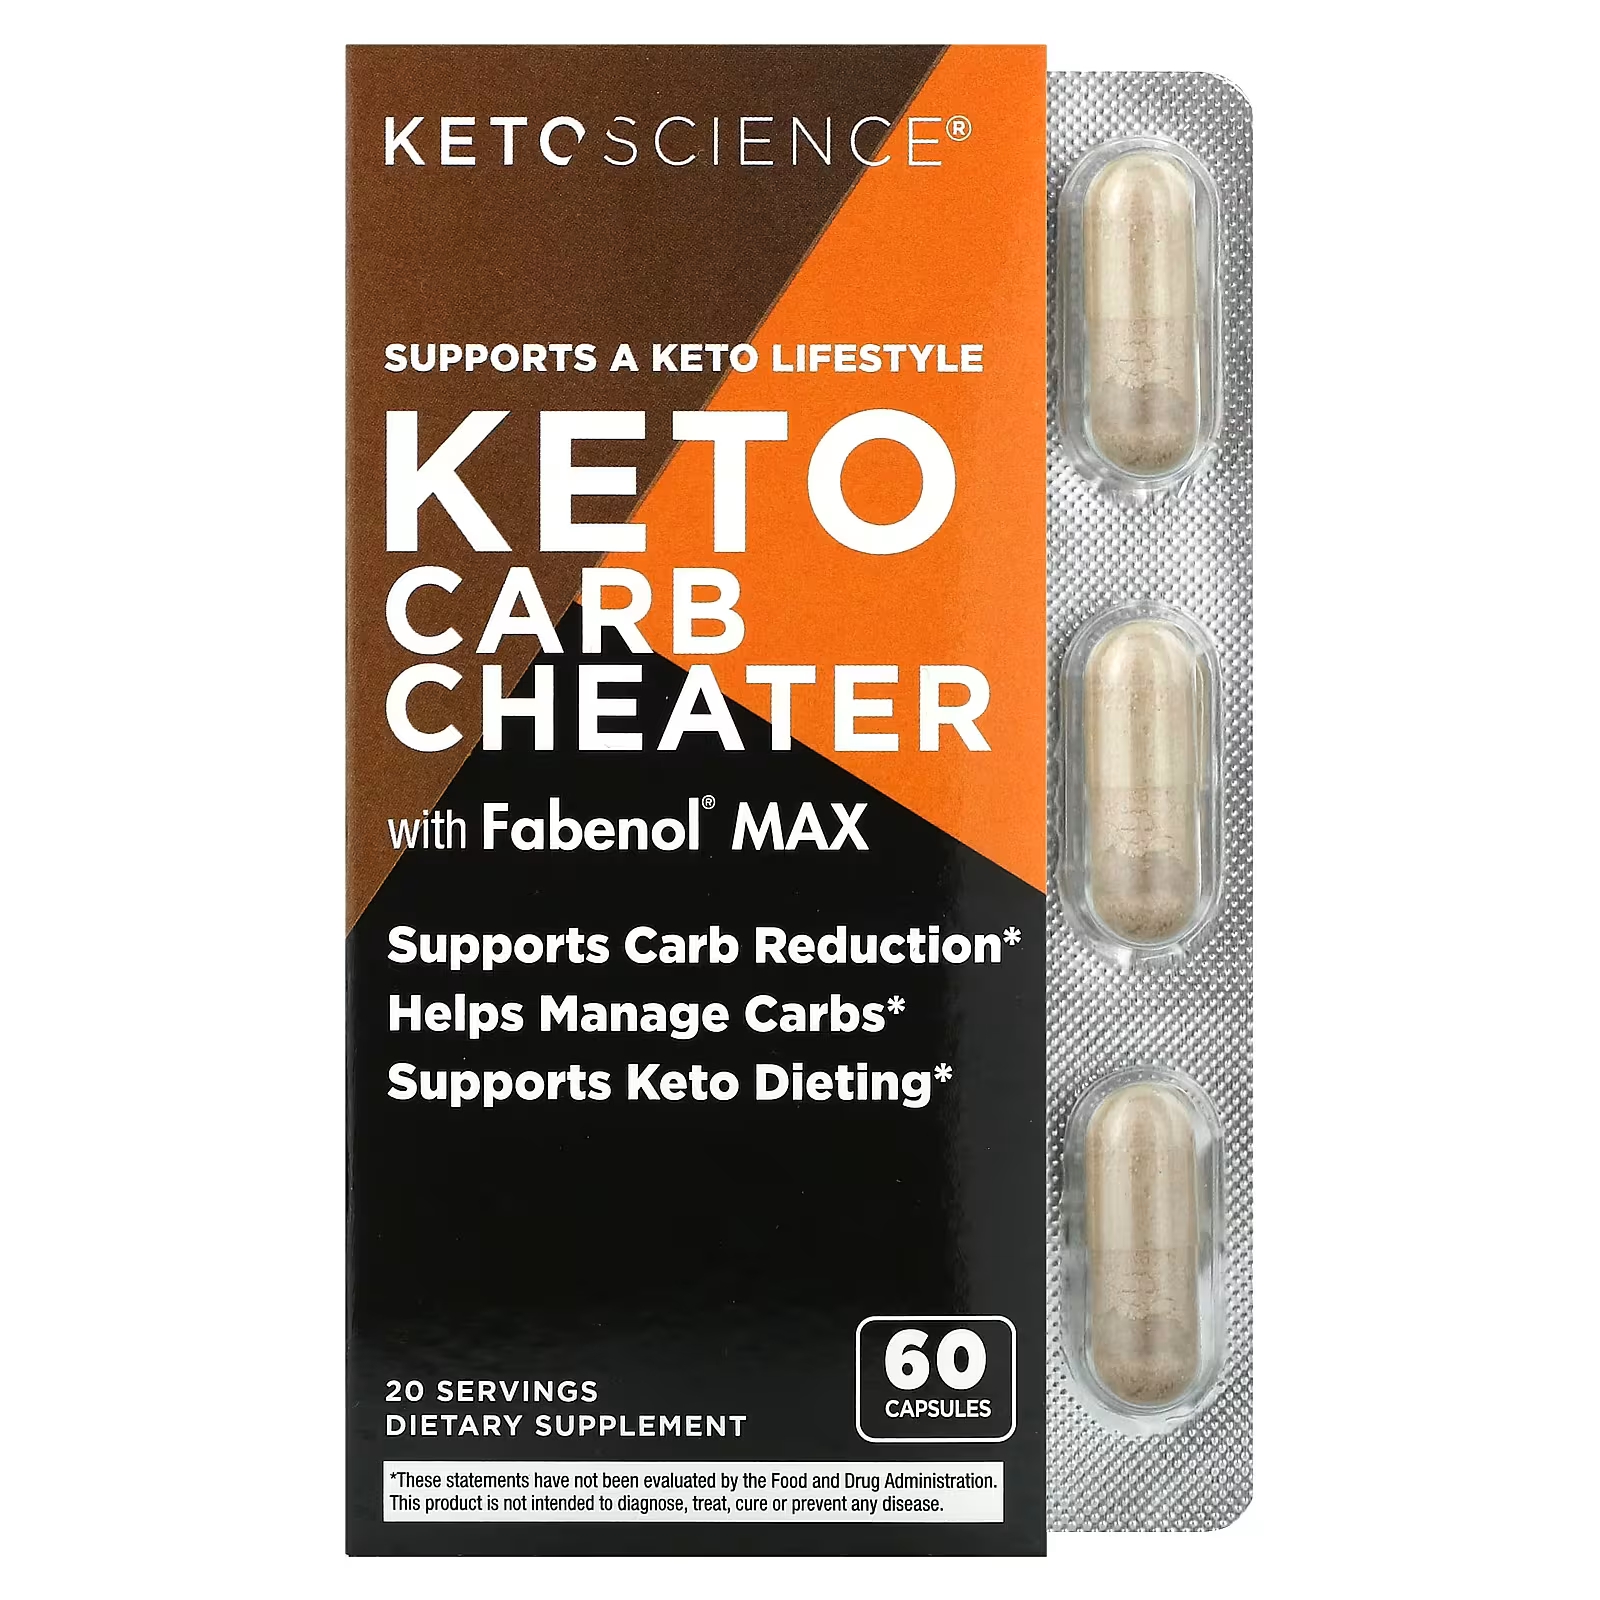 Пищевая добавка Keto Science Keto Carb Cheater & Fabenol Max, 60 капсул пищевая добавка ketologic relax keto bhb suntheanine 60 капсул